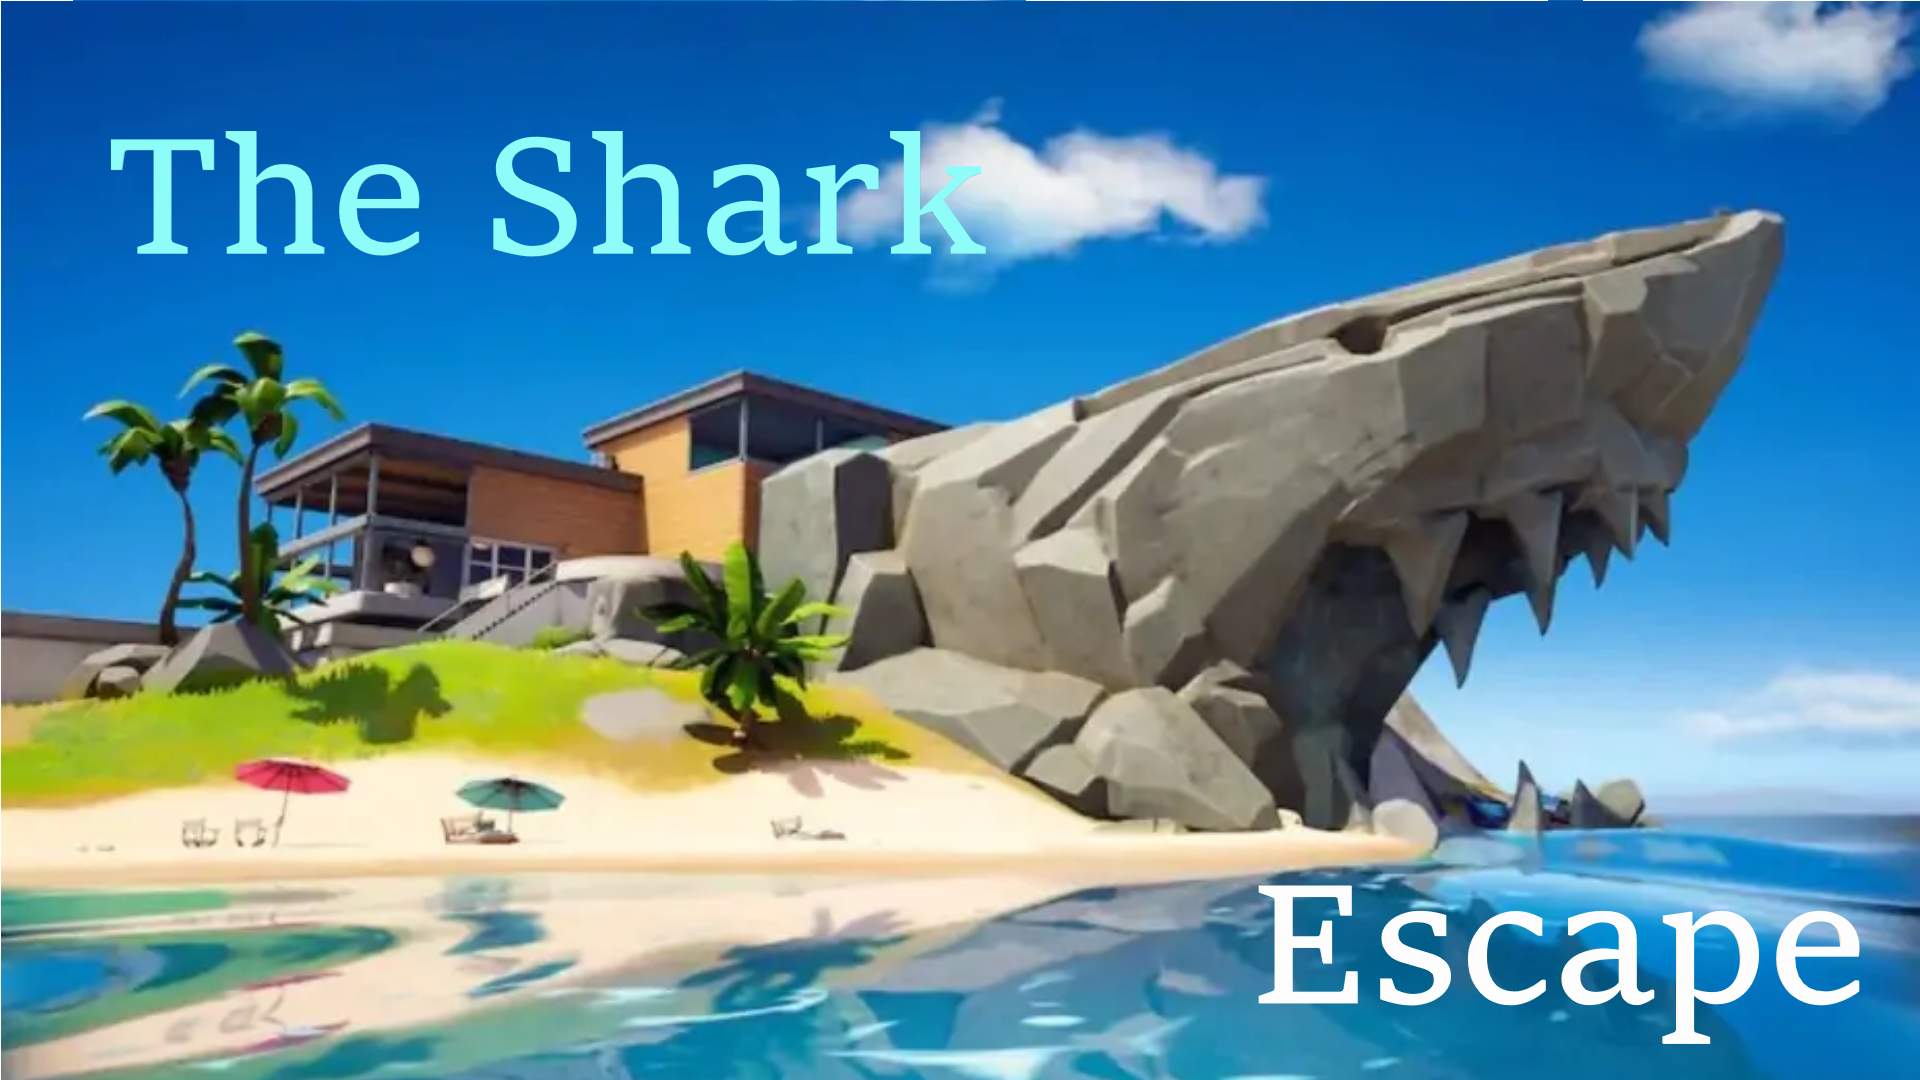 The Shark escape